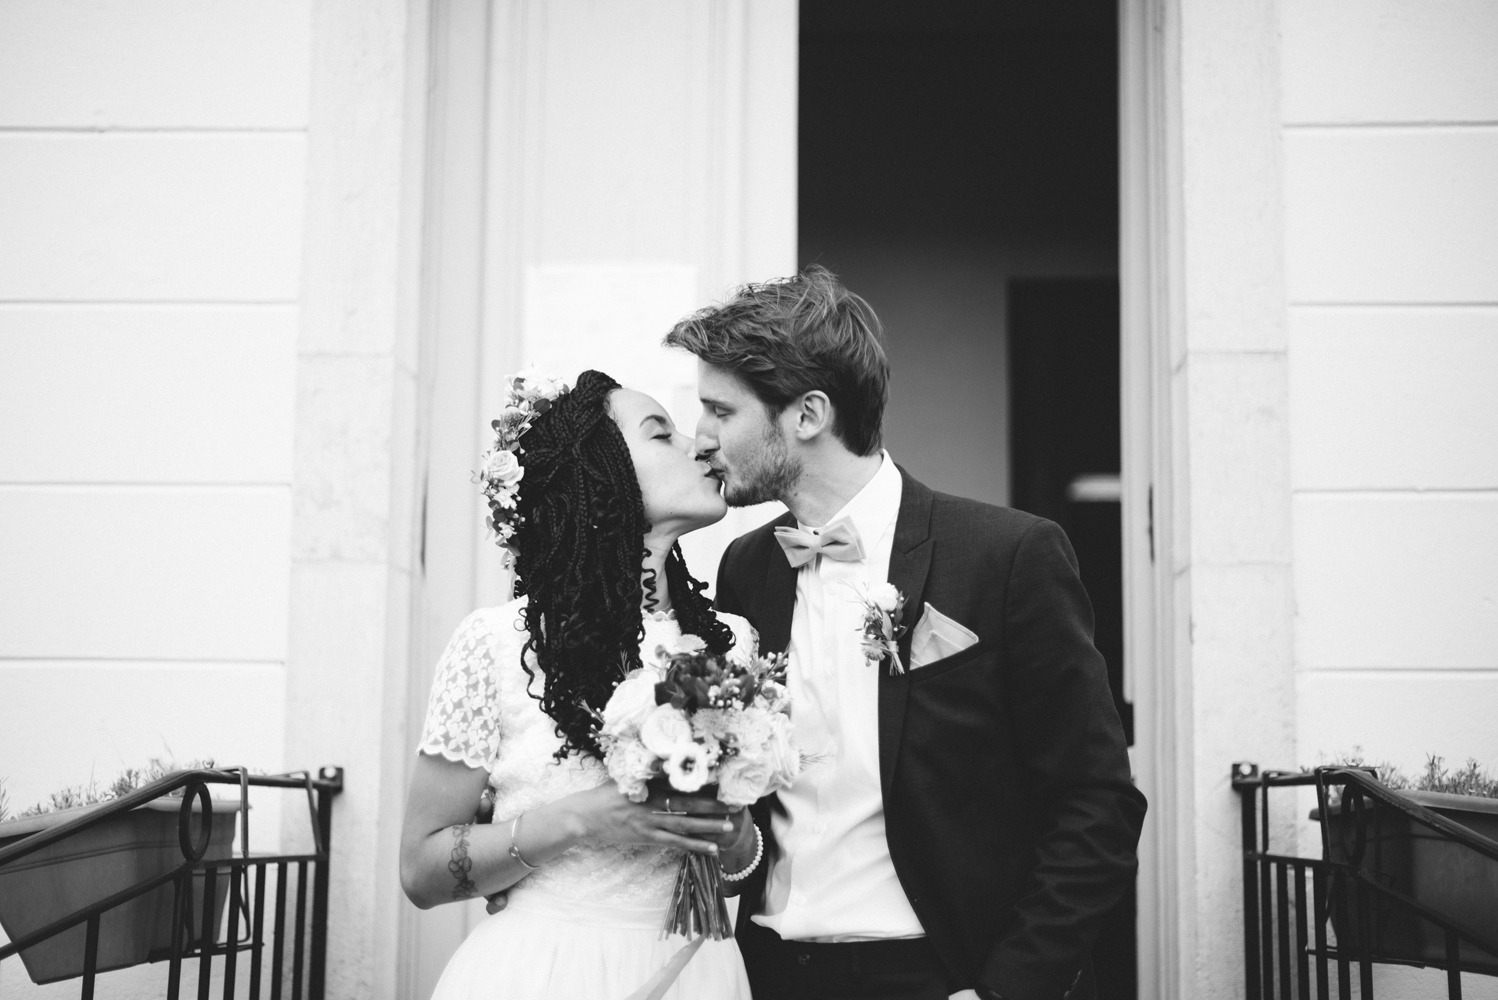 Photographe mariage grenoble fontainebleau